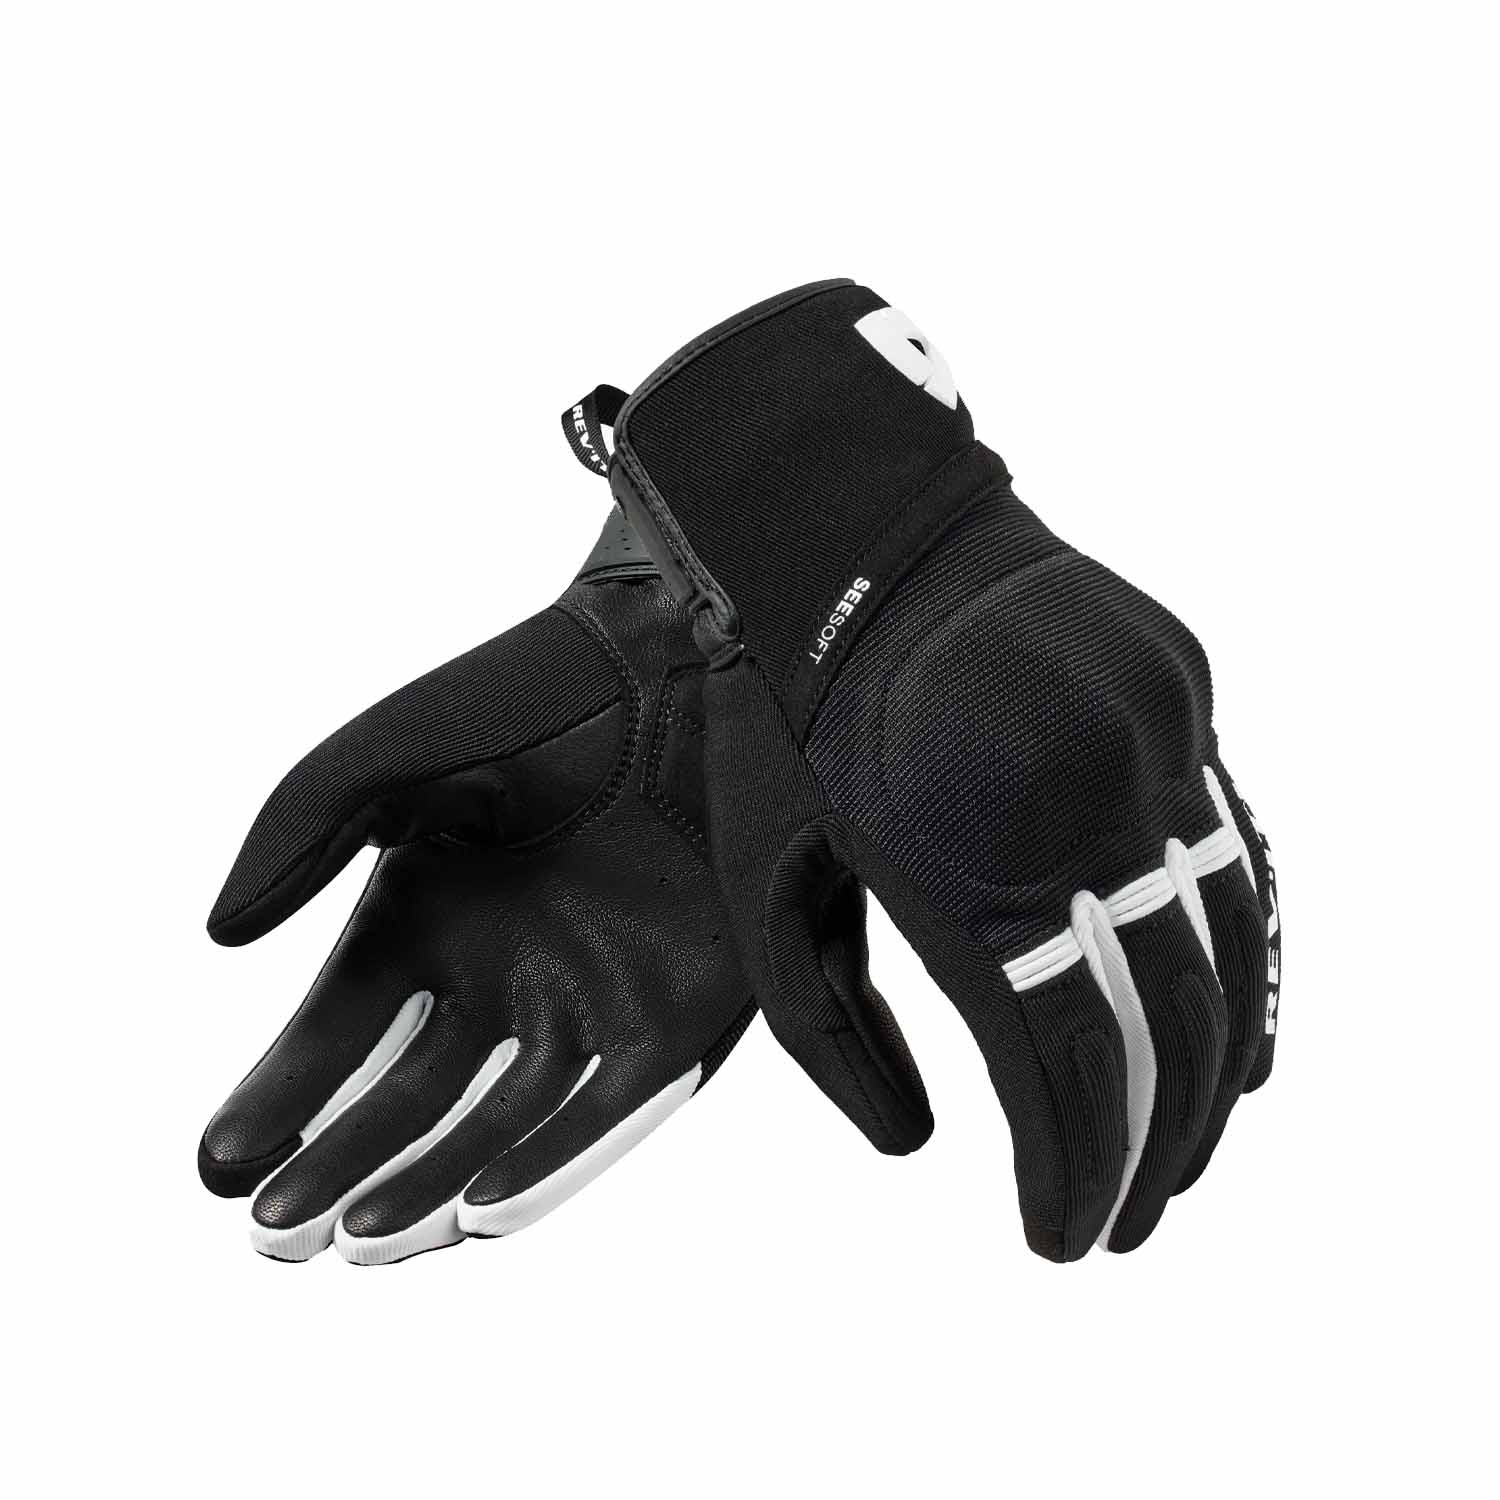 Image of REV'IT! Mosca 2 Gloves Black White Größe XL